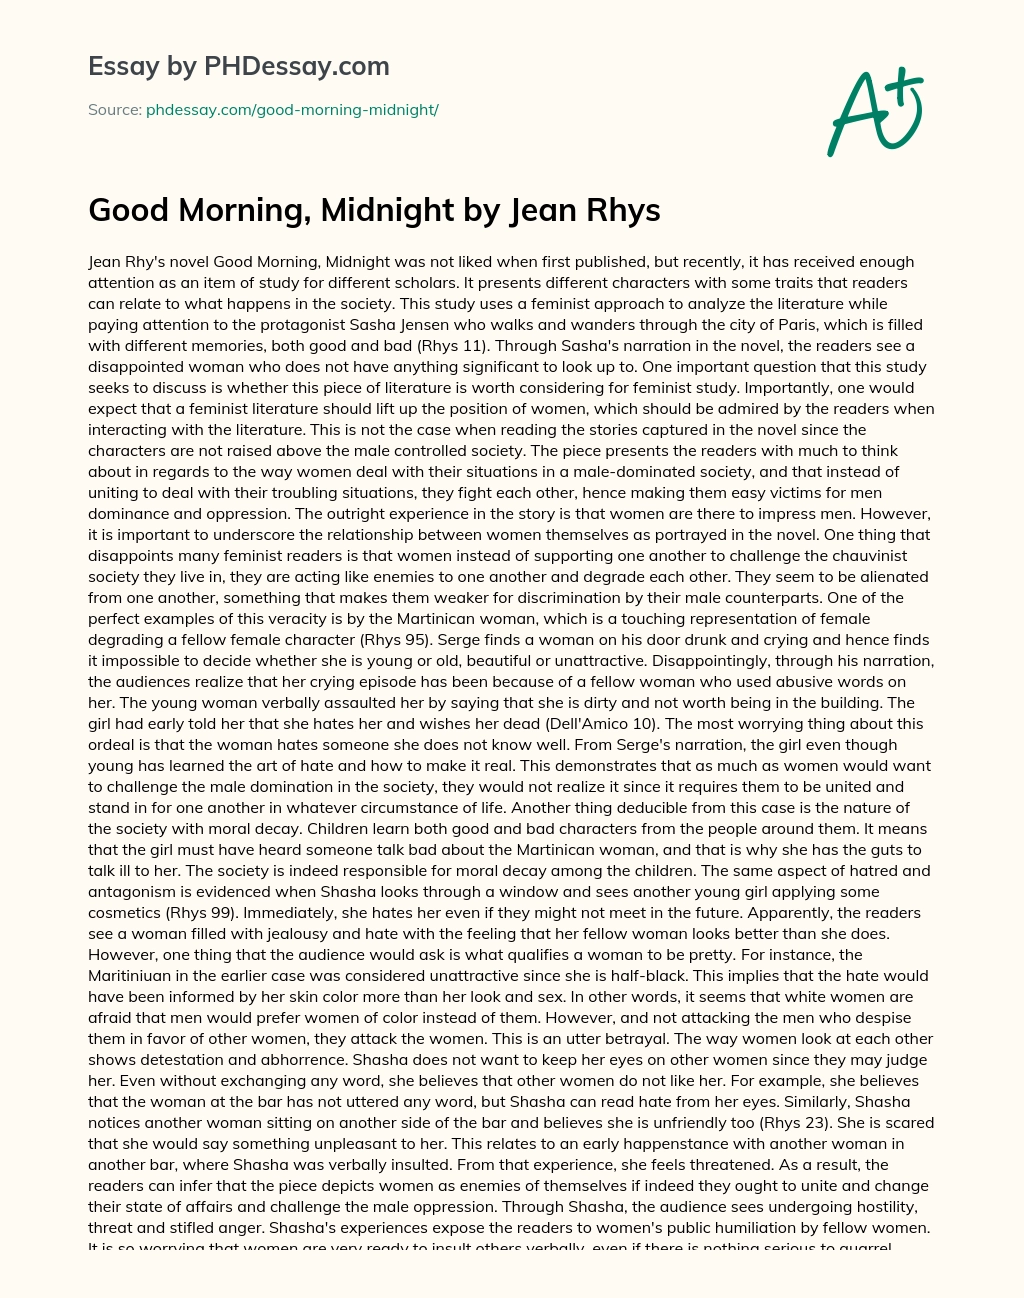 Good Morning, Midnight by Jean Rhys essay